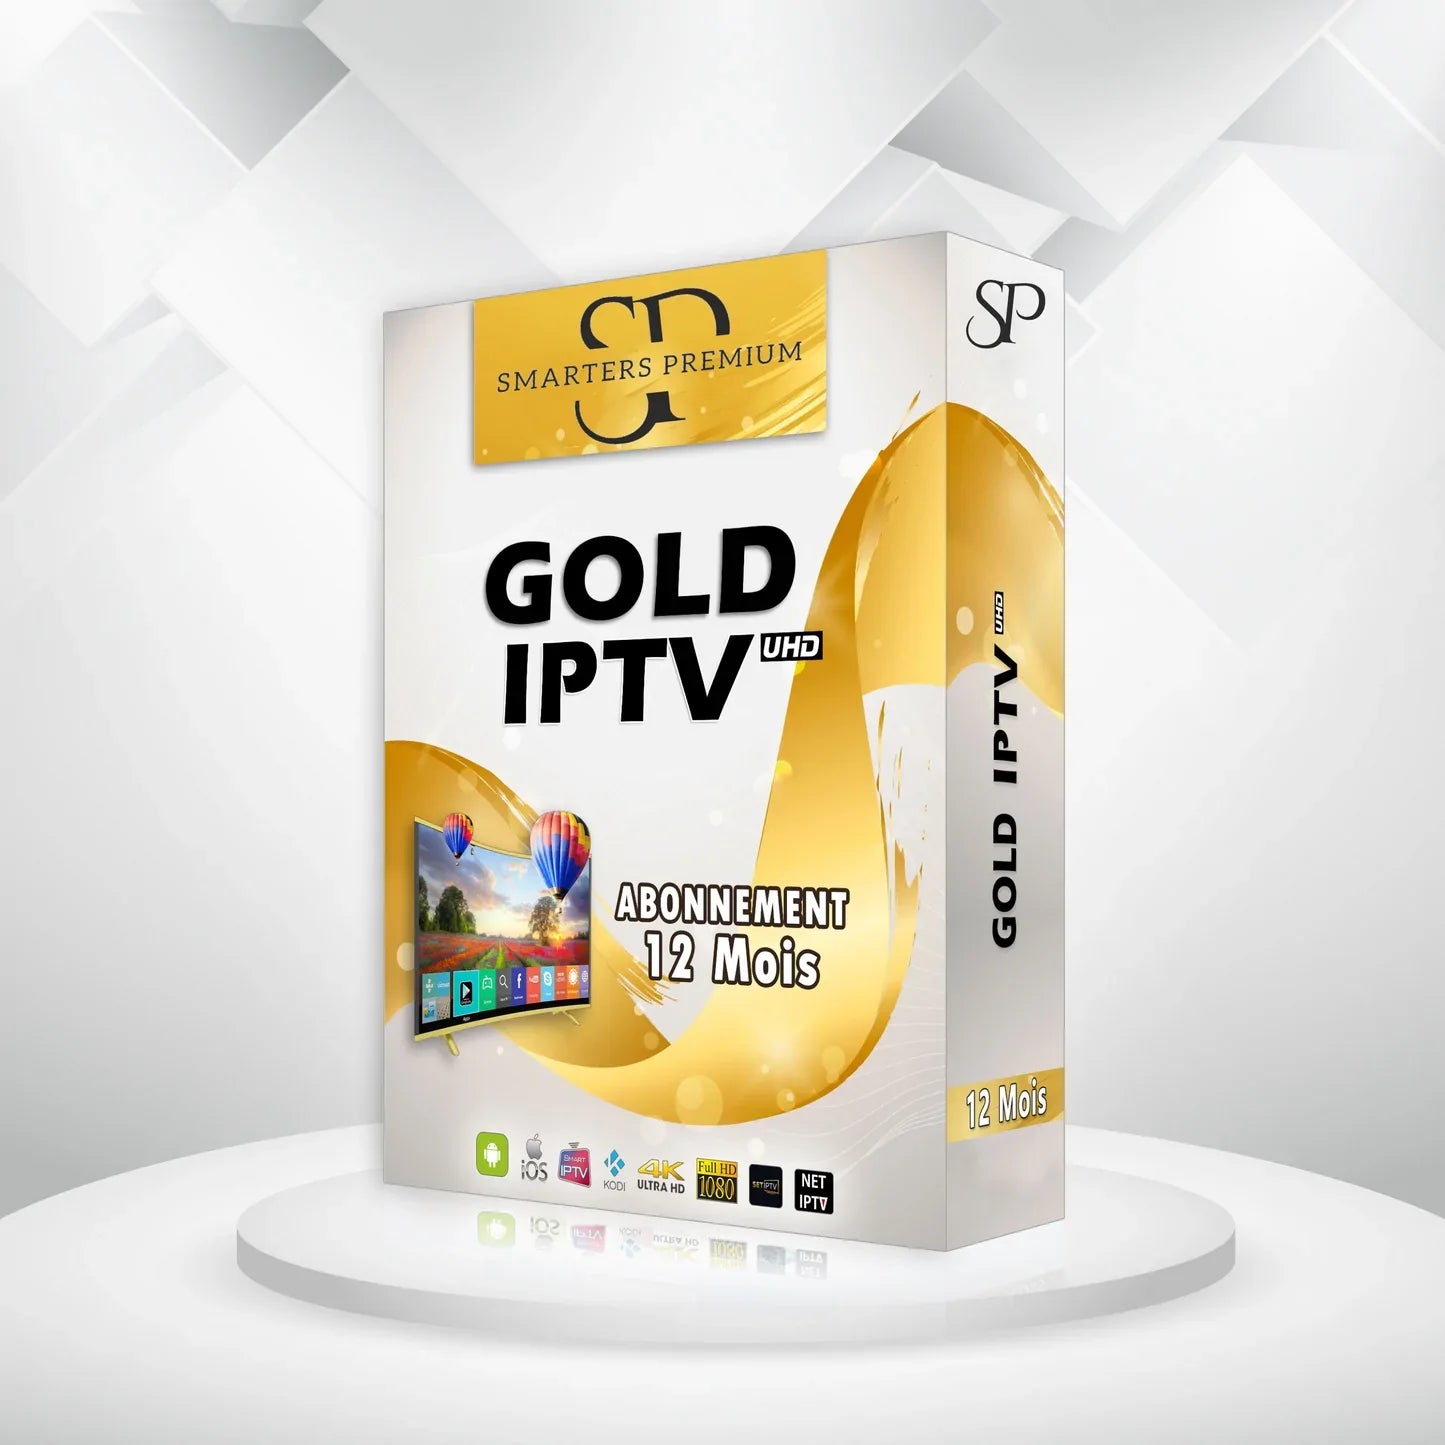 Renew membership | IPTV Community